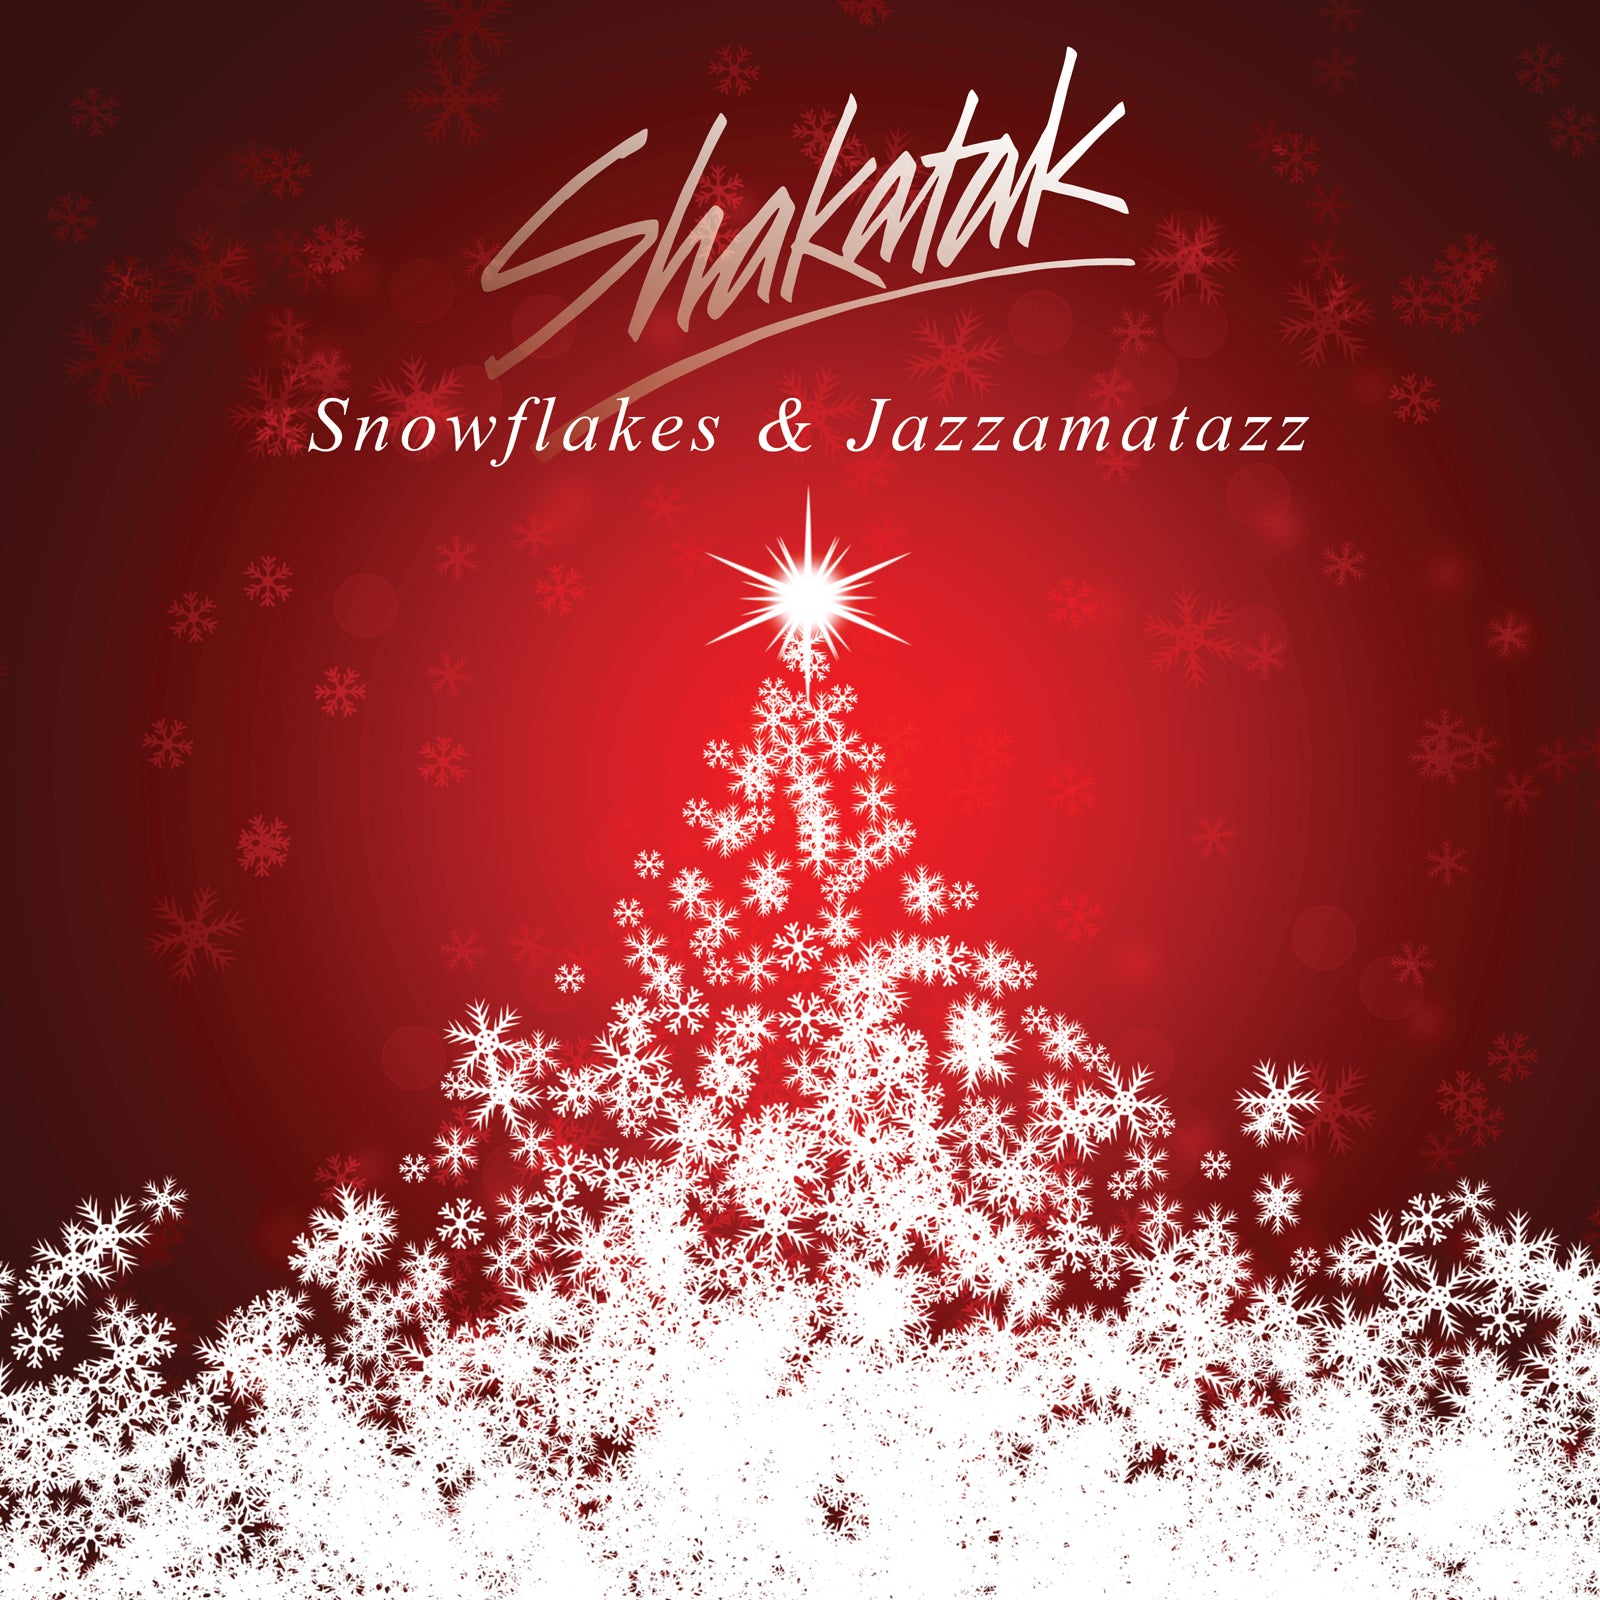 Shakatak - Snowflakes & Jazzamatazz - CD Album - Secret Records Limited